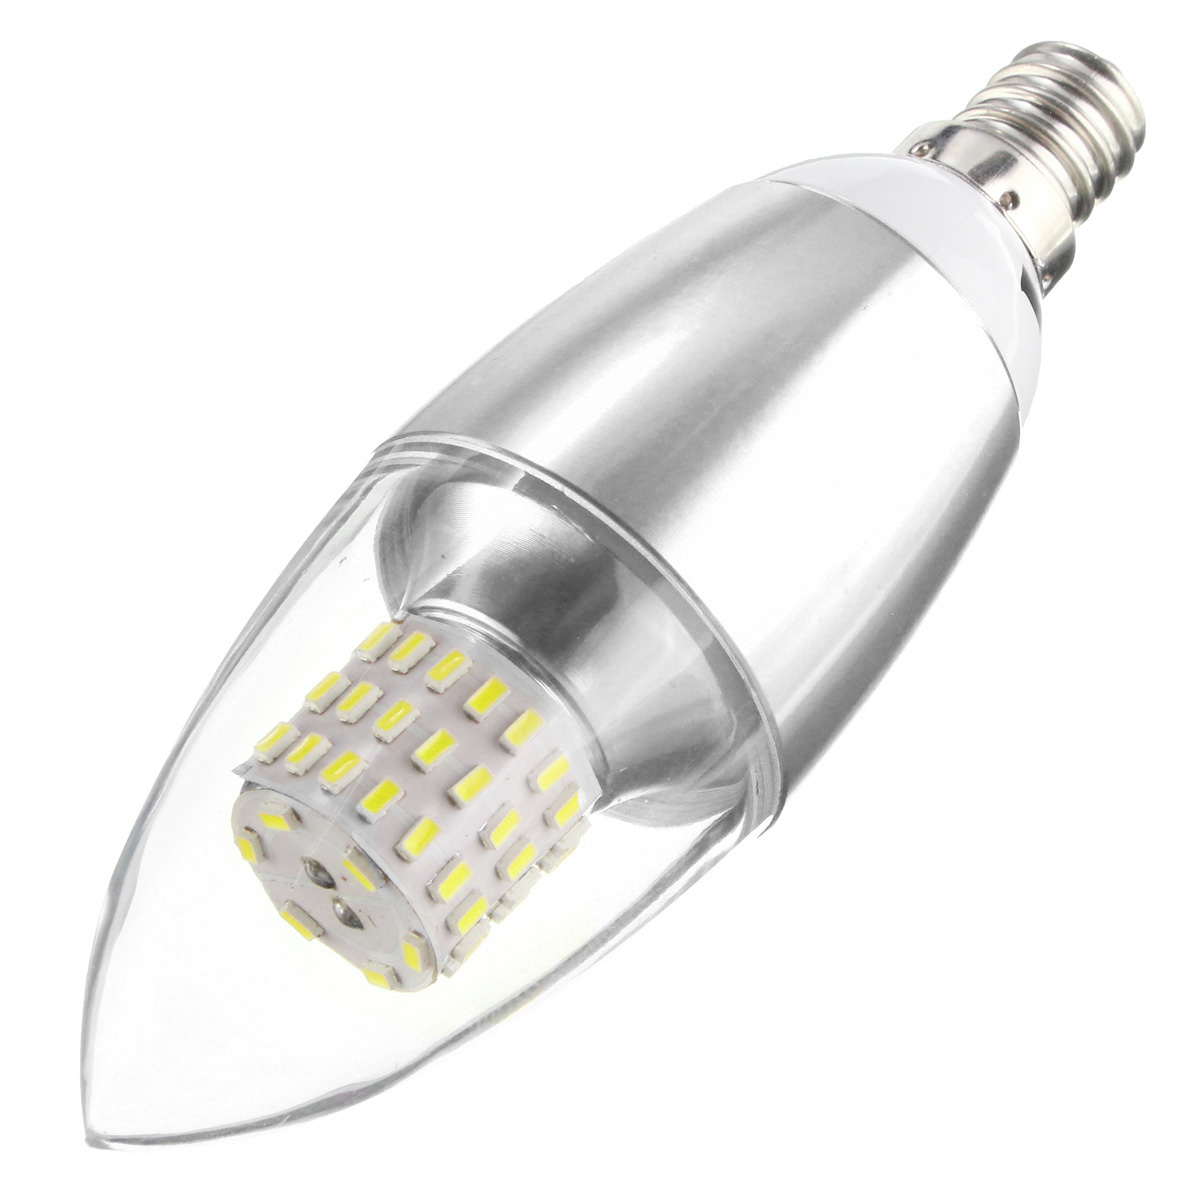 Dimmable E14 E12 E27 7W 60 580LM SMD 3014 LED White Warm White Candle Light Lamp Bulb AC 110V